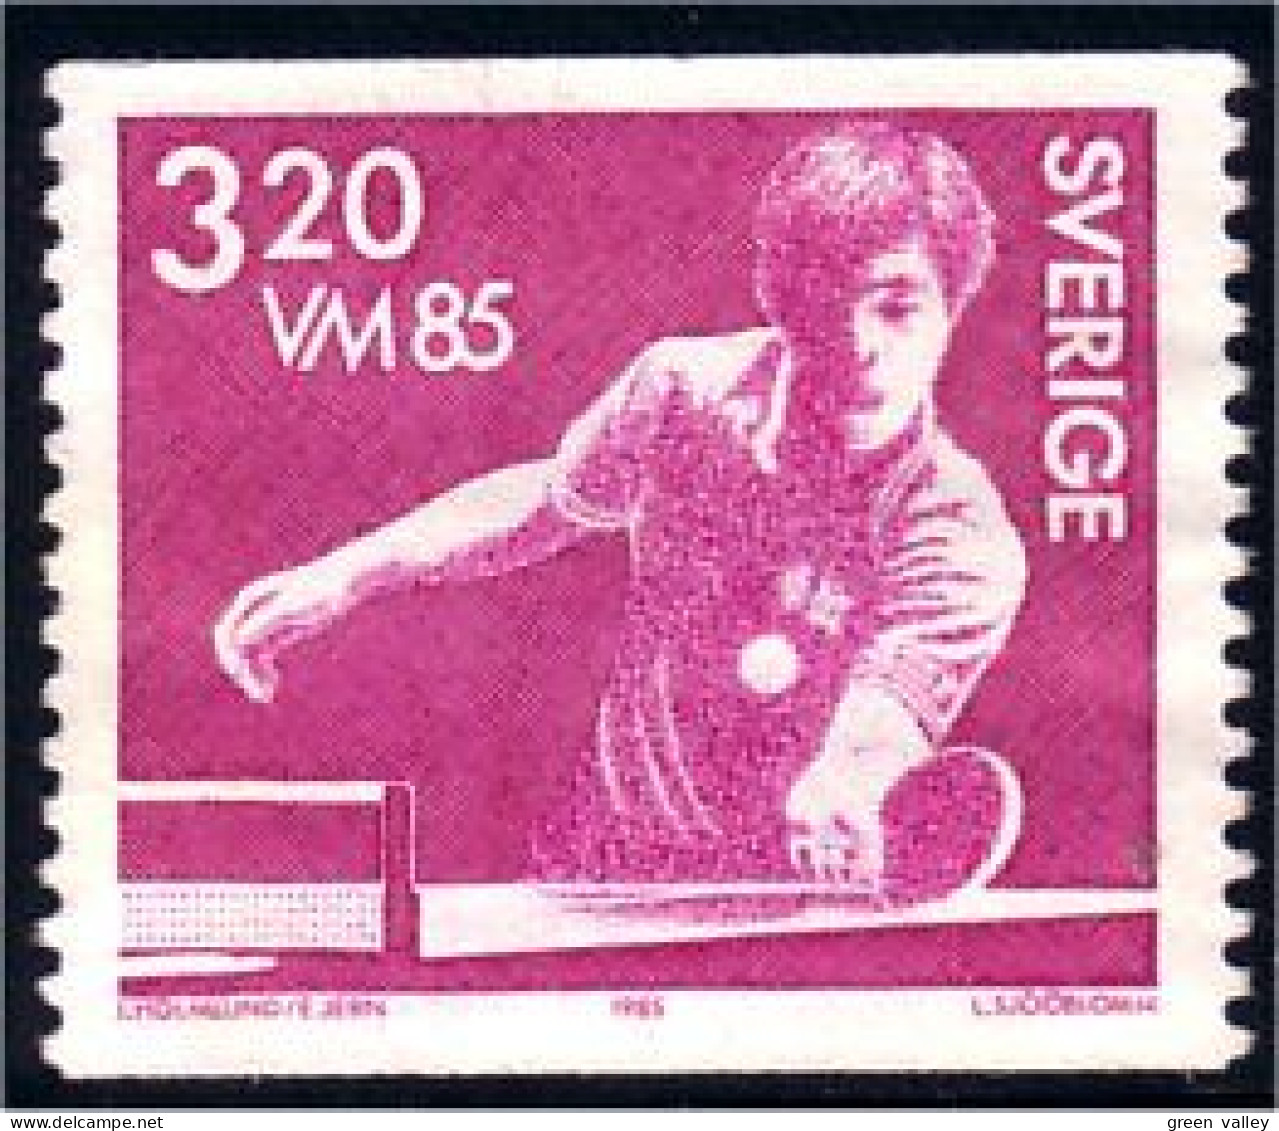 840 Sweden Table Tennis Ping Pong No Gum (SWE-84) - Tennis De Table